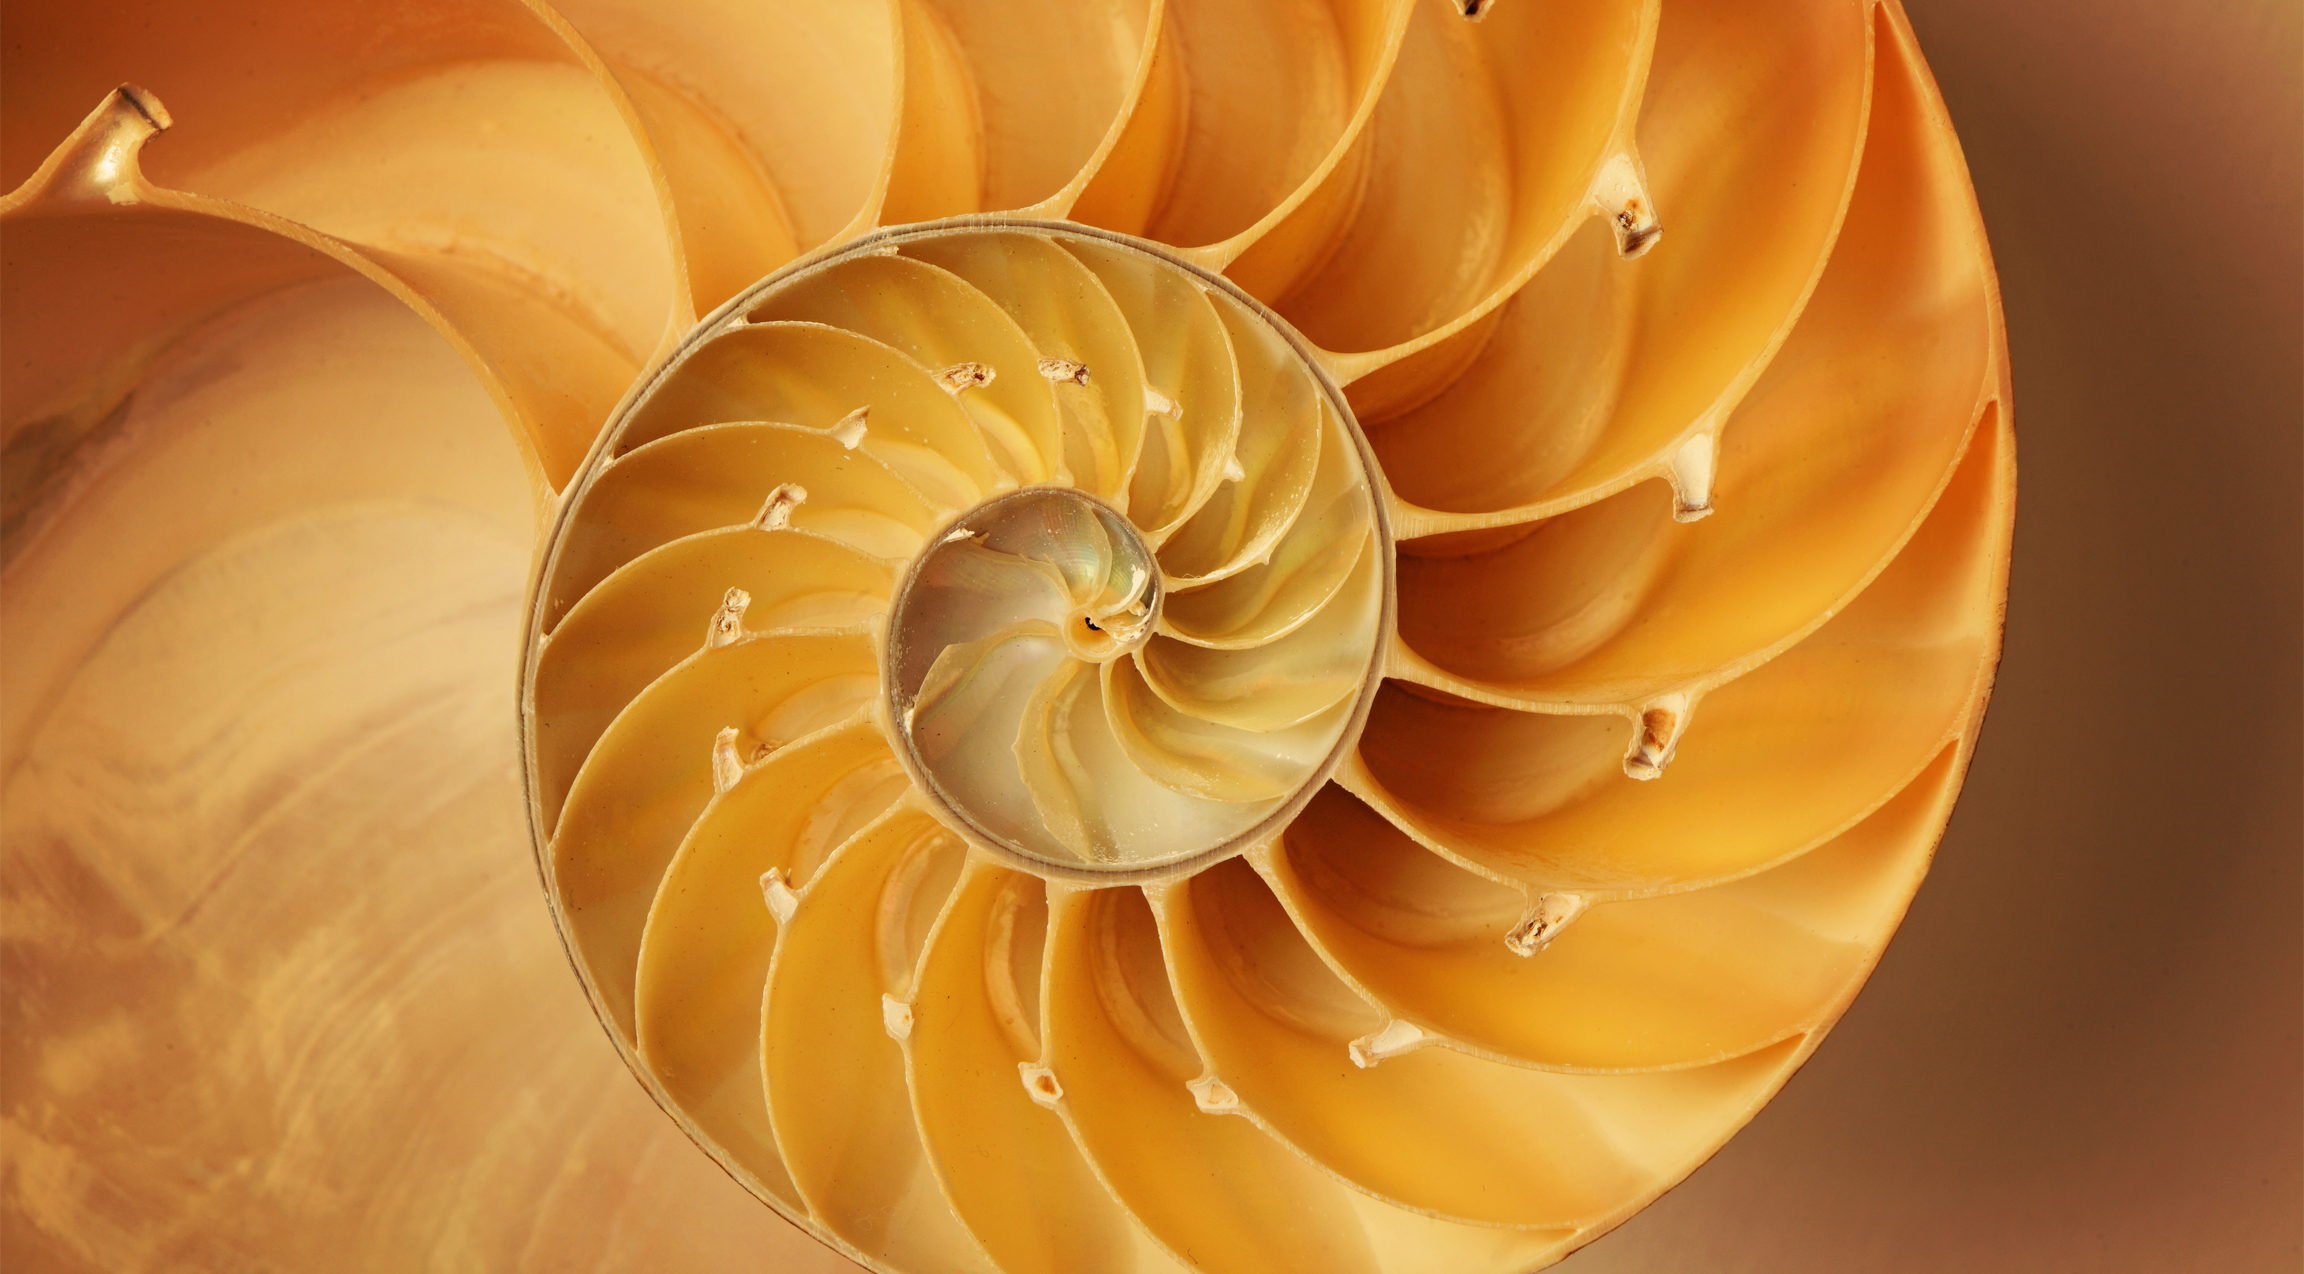 fibonacci sequence spiral in nature